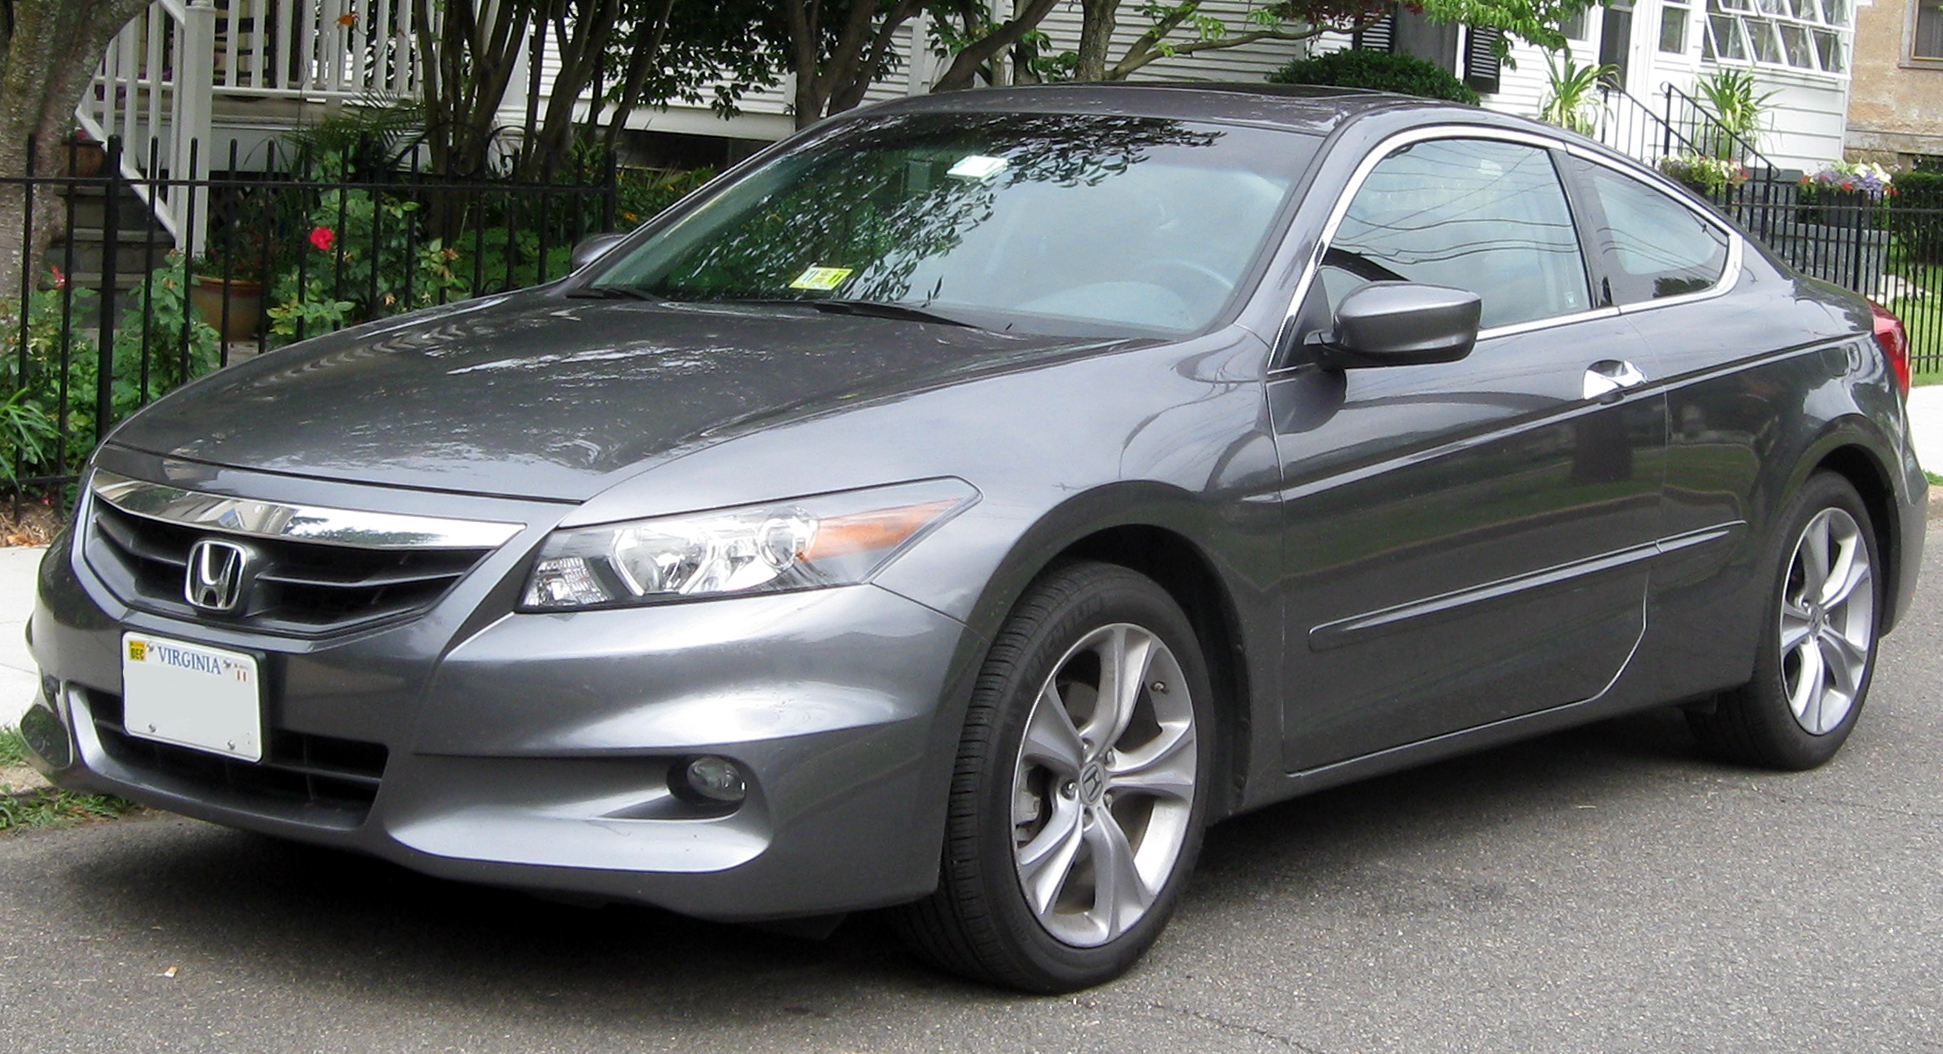 File:2011 Honda Accord coupe -- 06-20-2011.jpg - Wikipedia